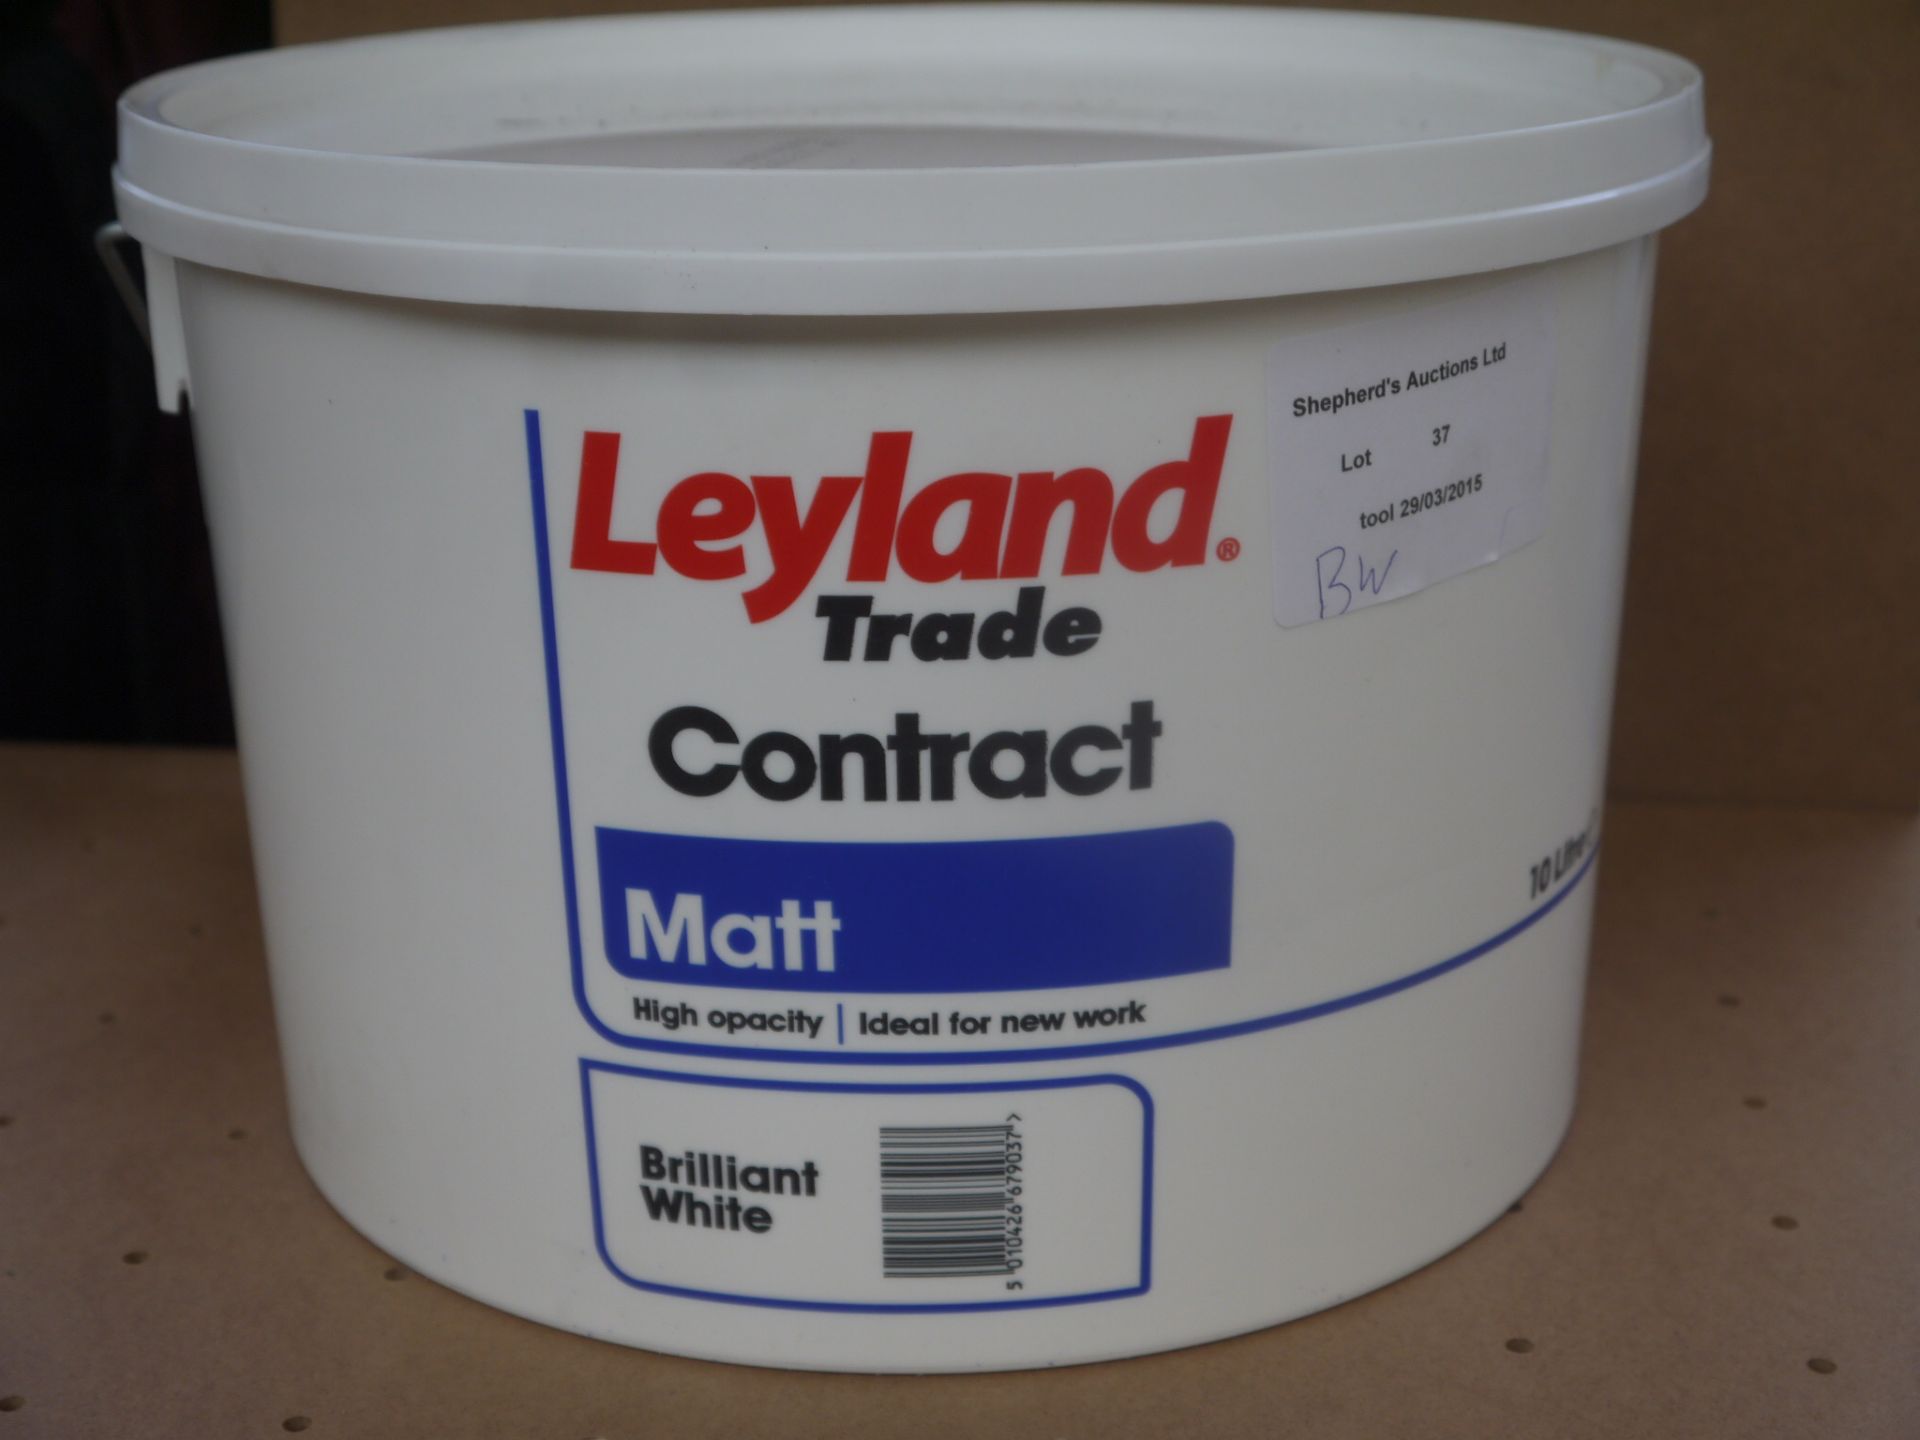 Leyland Trade Contract Matt Brilliant White Paint, 10 litre. New.